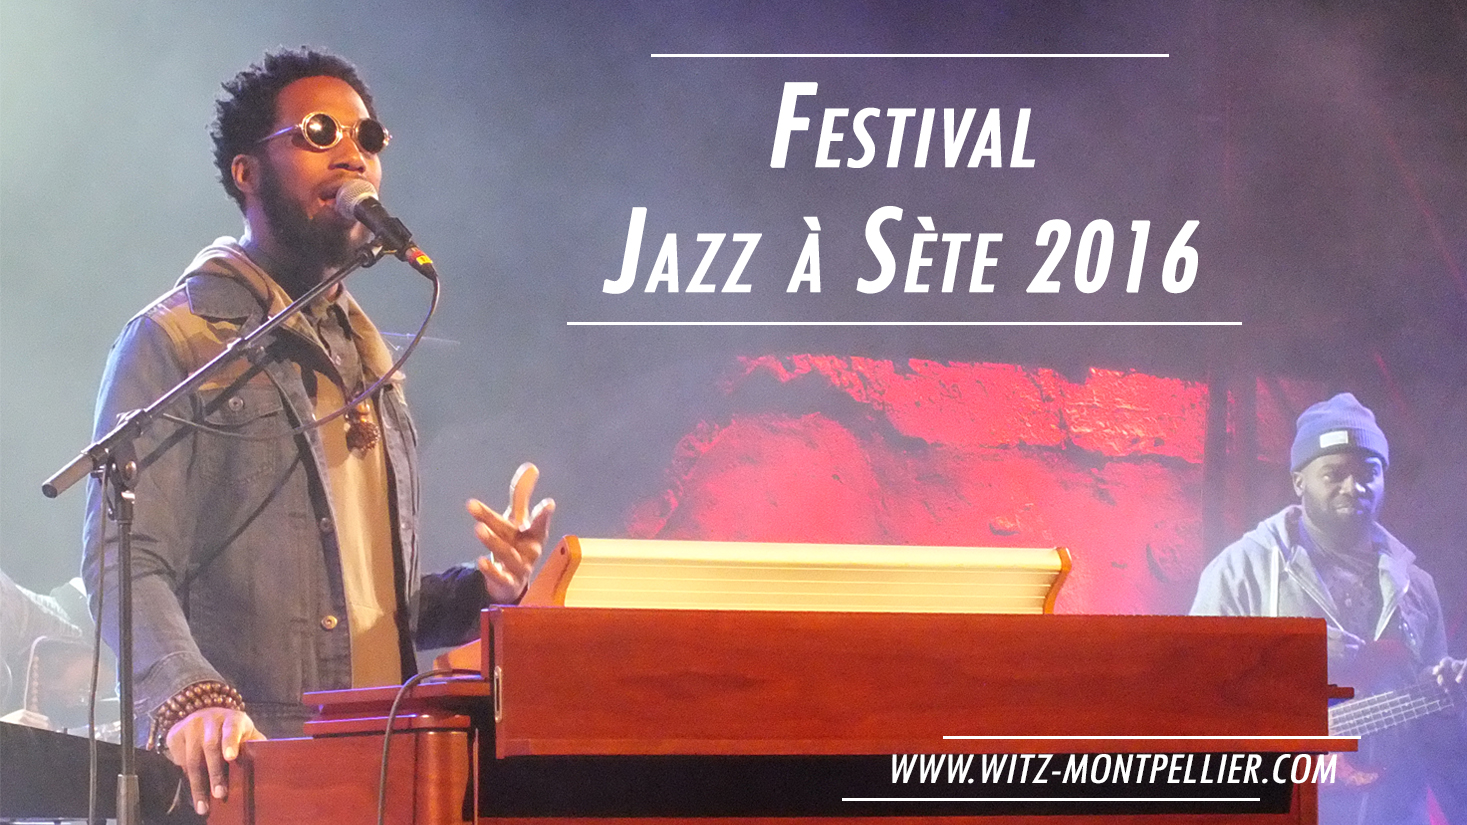 Festival Jazz à Sète 2016 : Cory Henry et Christian Scott